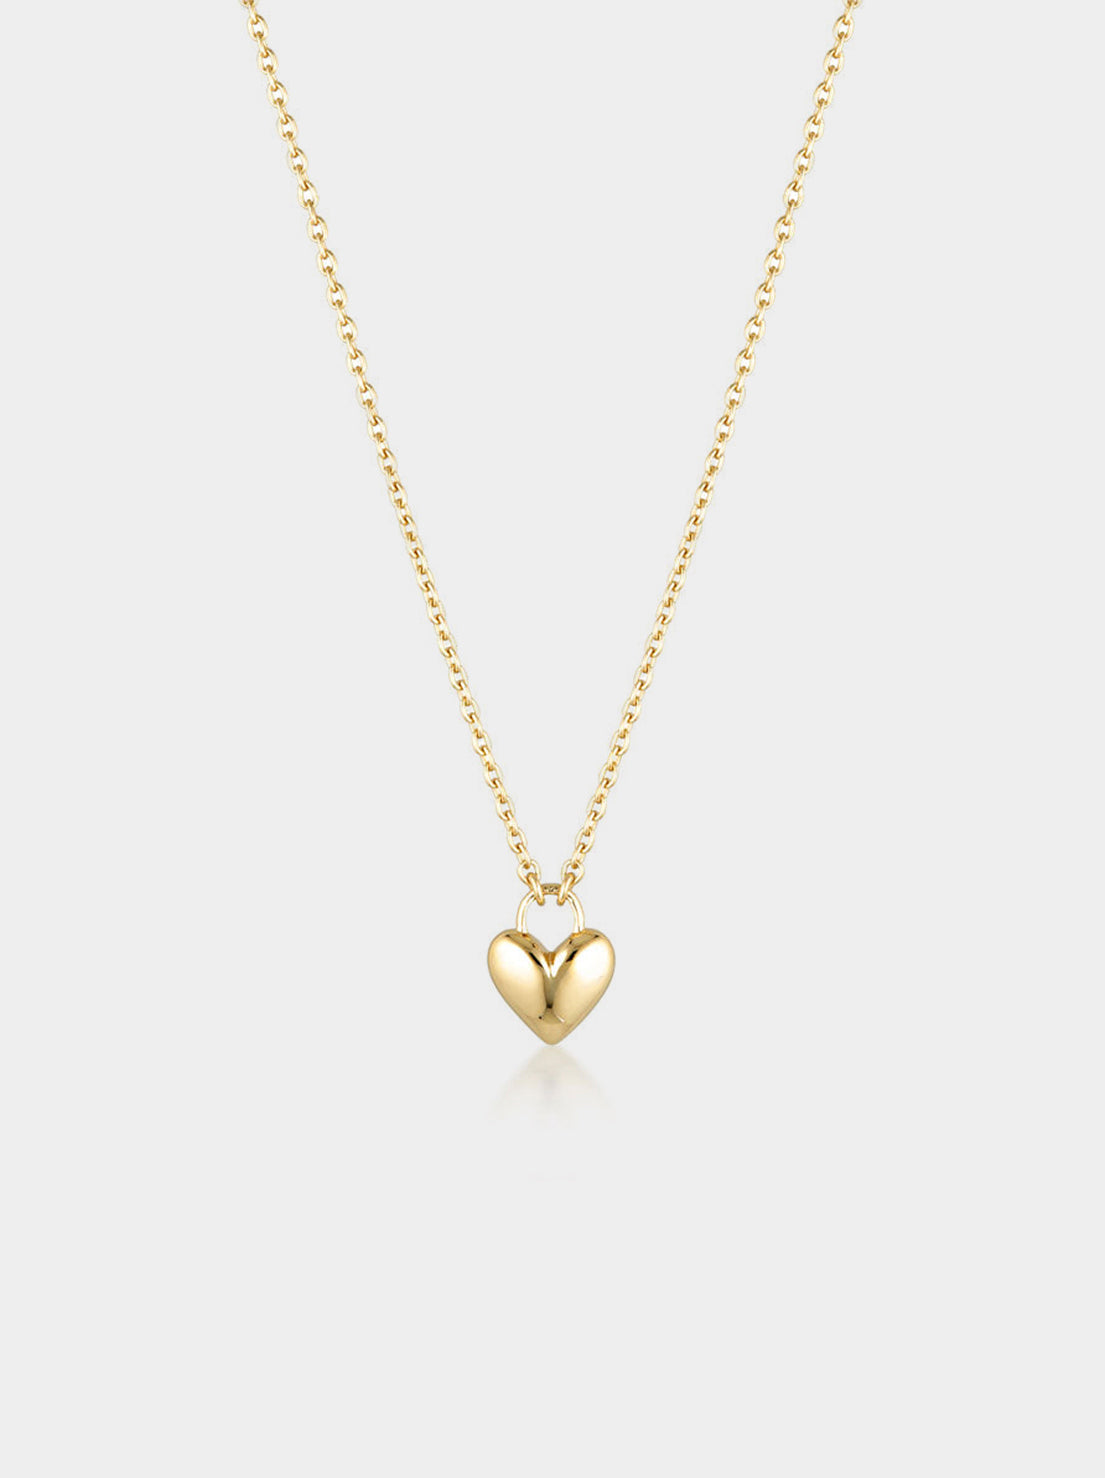 Linda Tahija - Mini Amore Necklace - Gold Plated